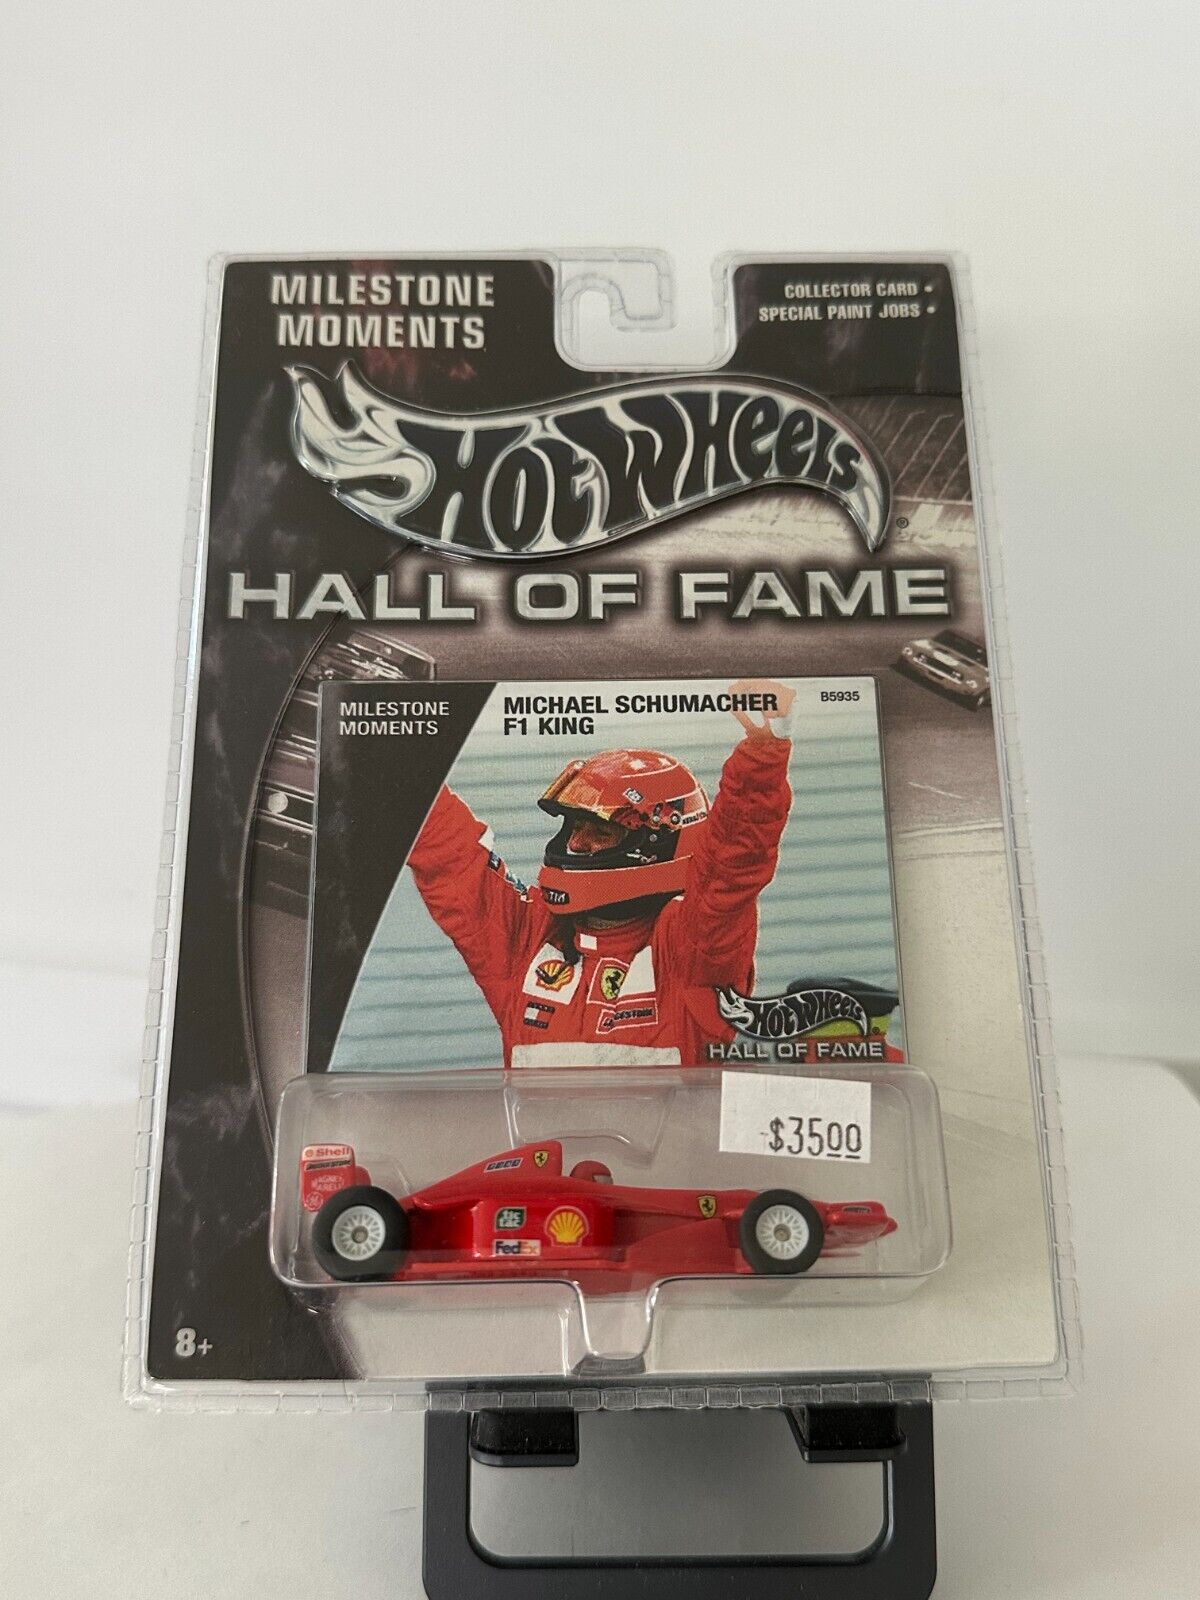 Hot wheels Hall Of Fame Milestone Moment Michael Schumacher F1 King L74